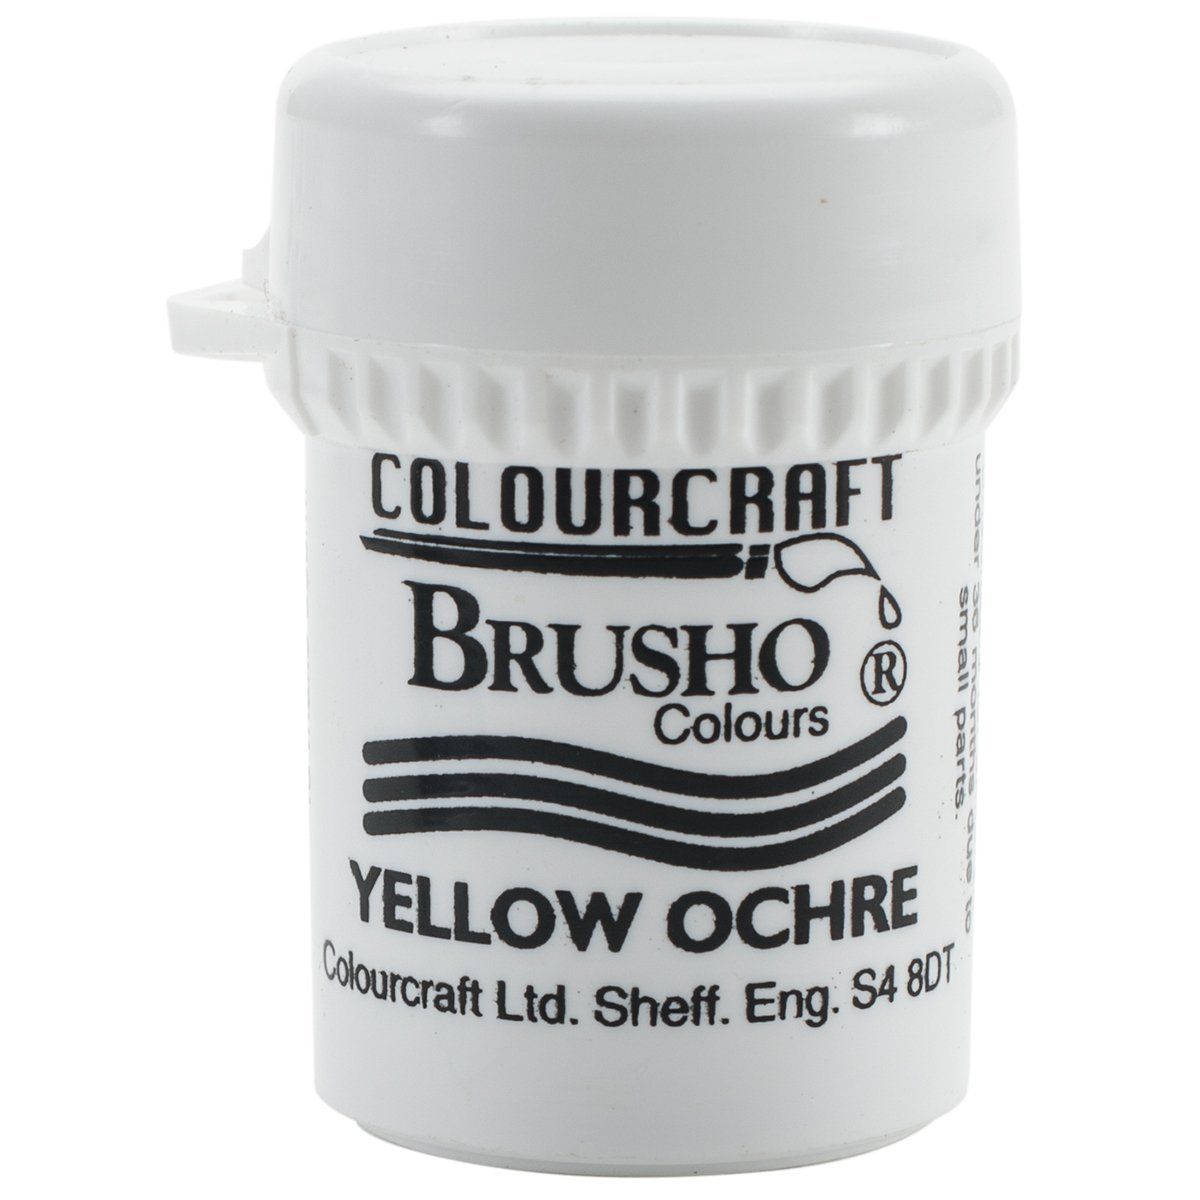 Brusho Crystal Colour - Yellow Ochre15 gm